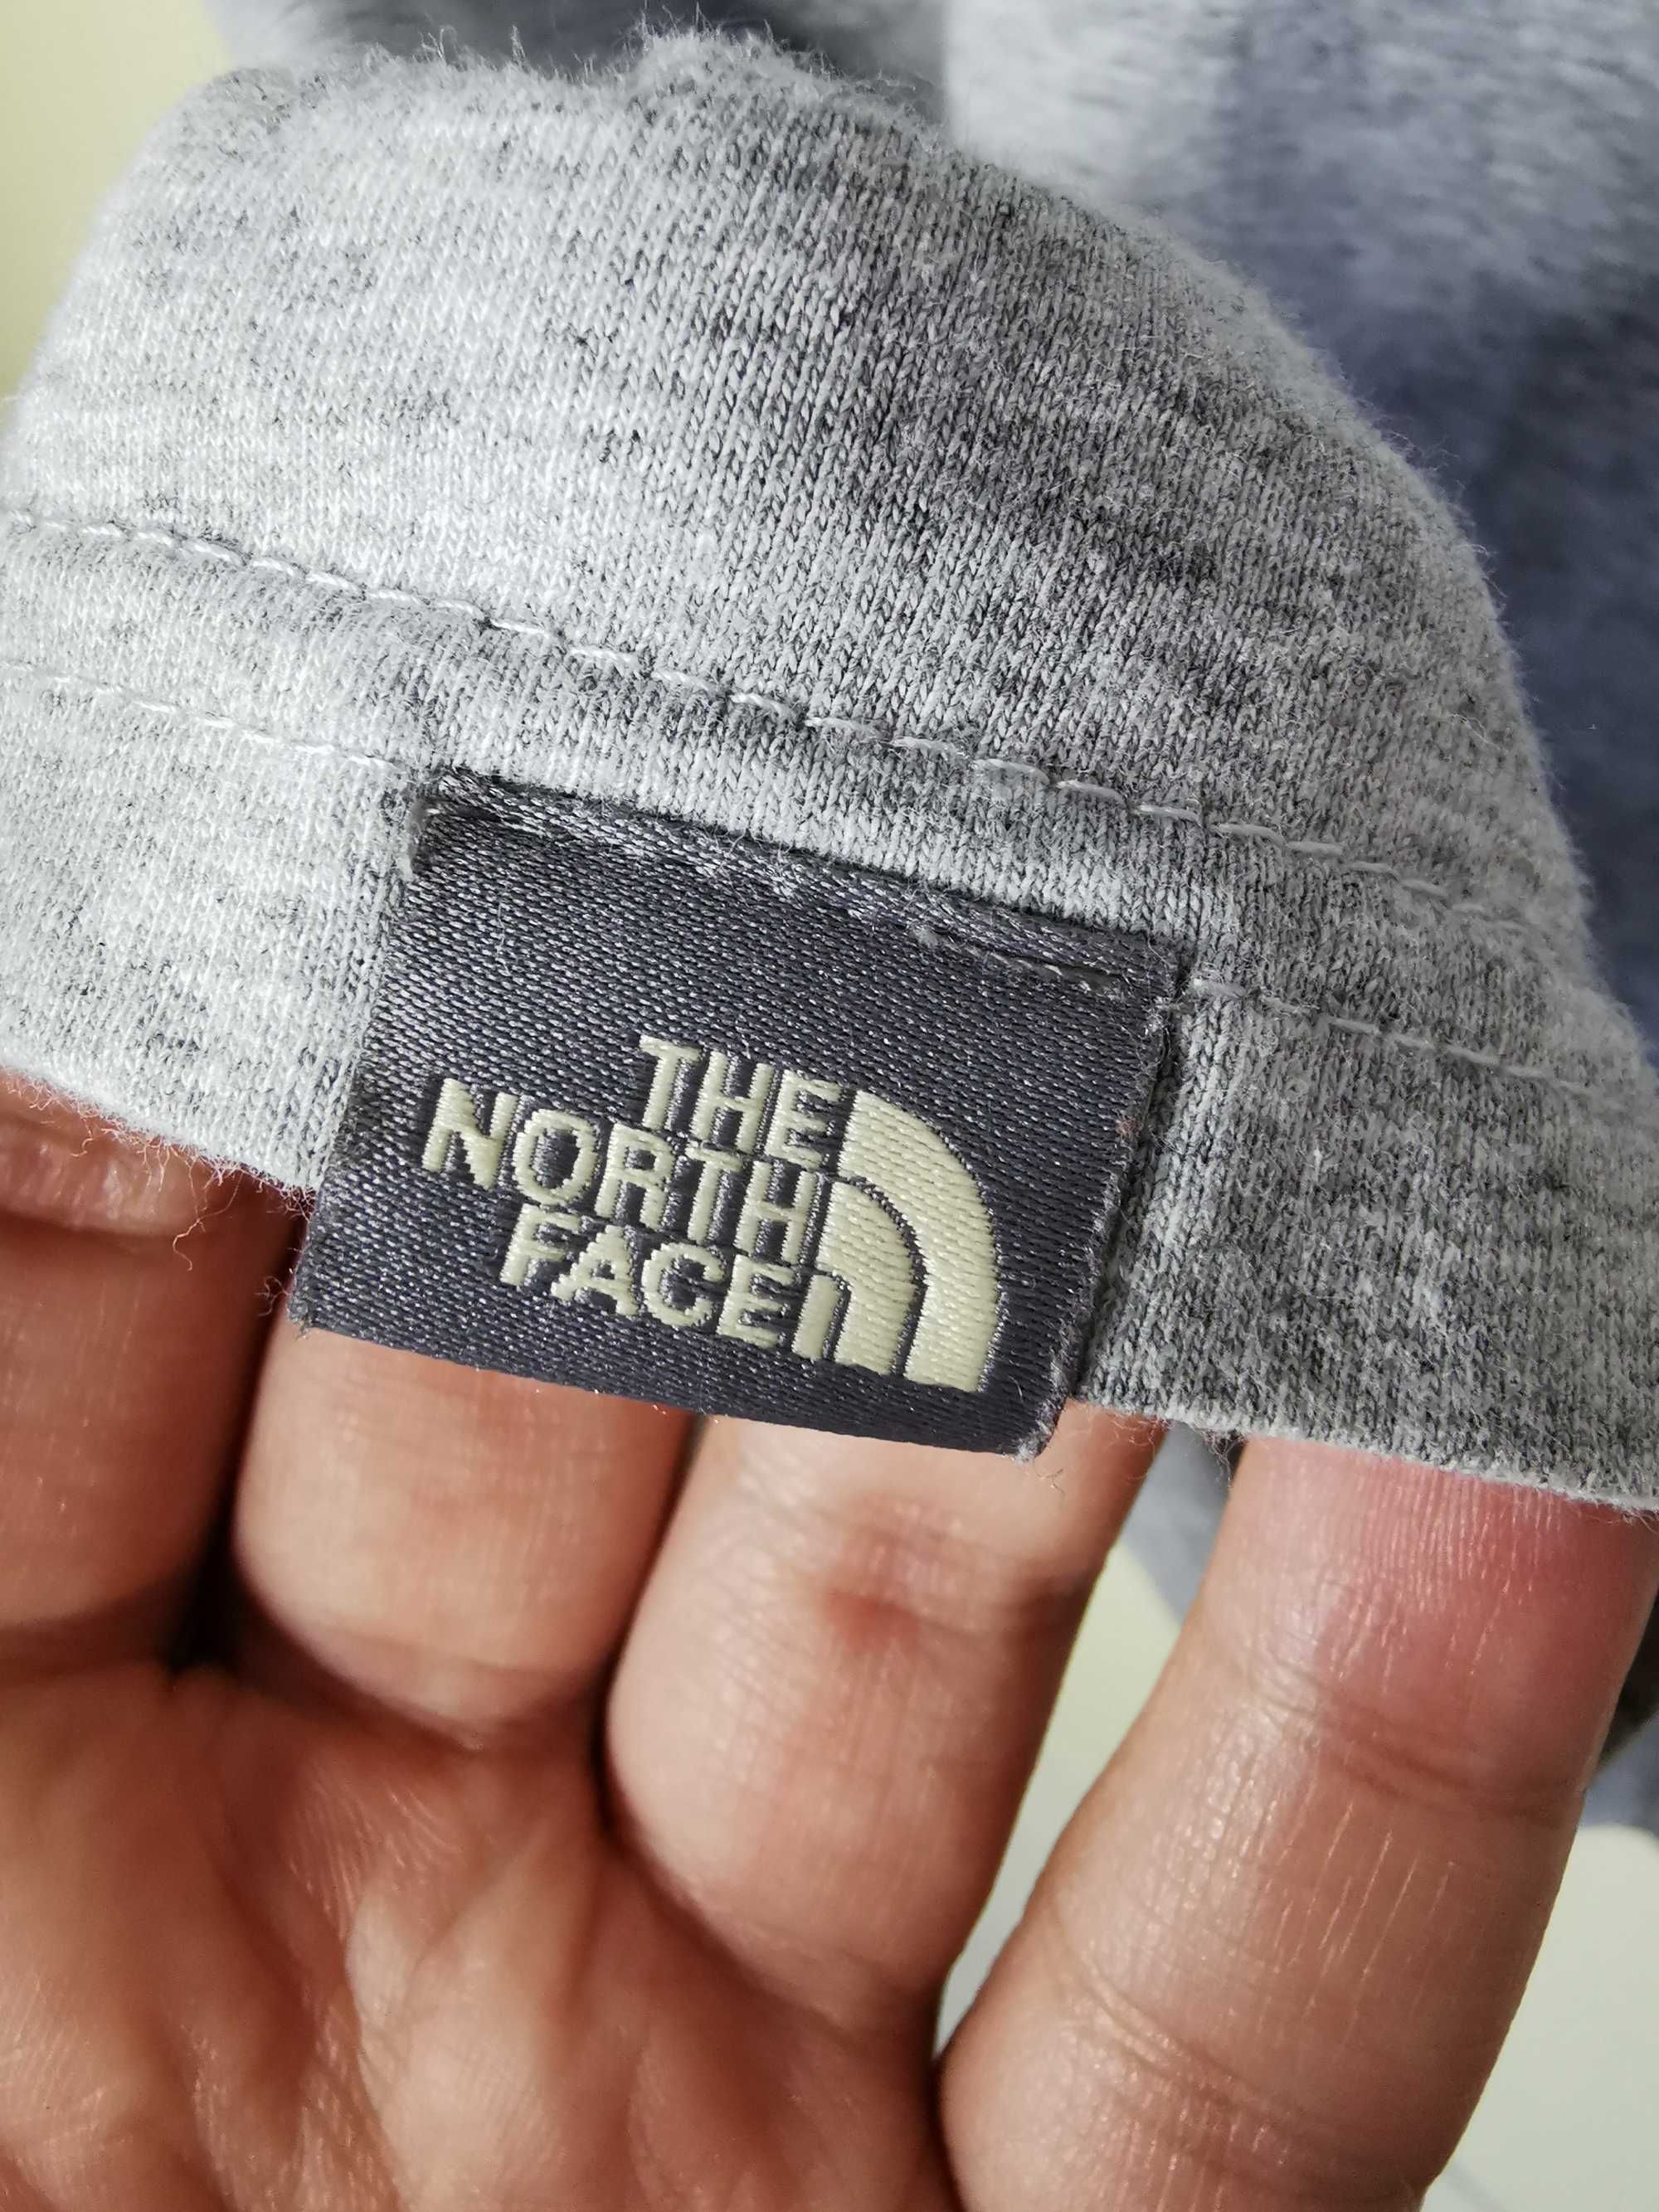 The North Face TNF szary męski t-shirt koszulka r. M